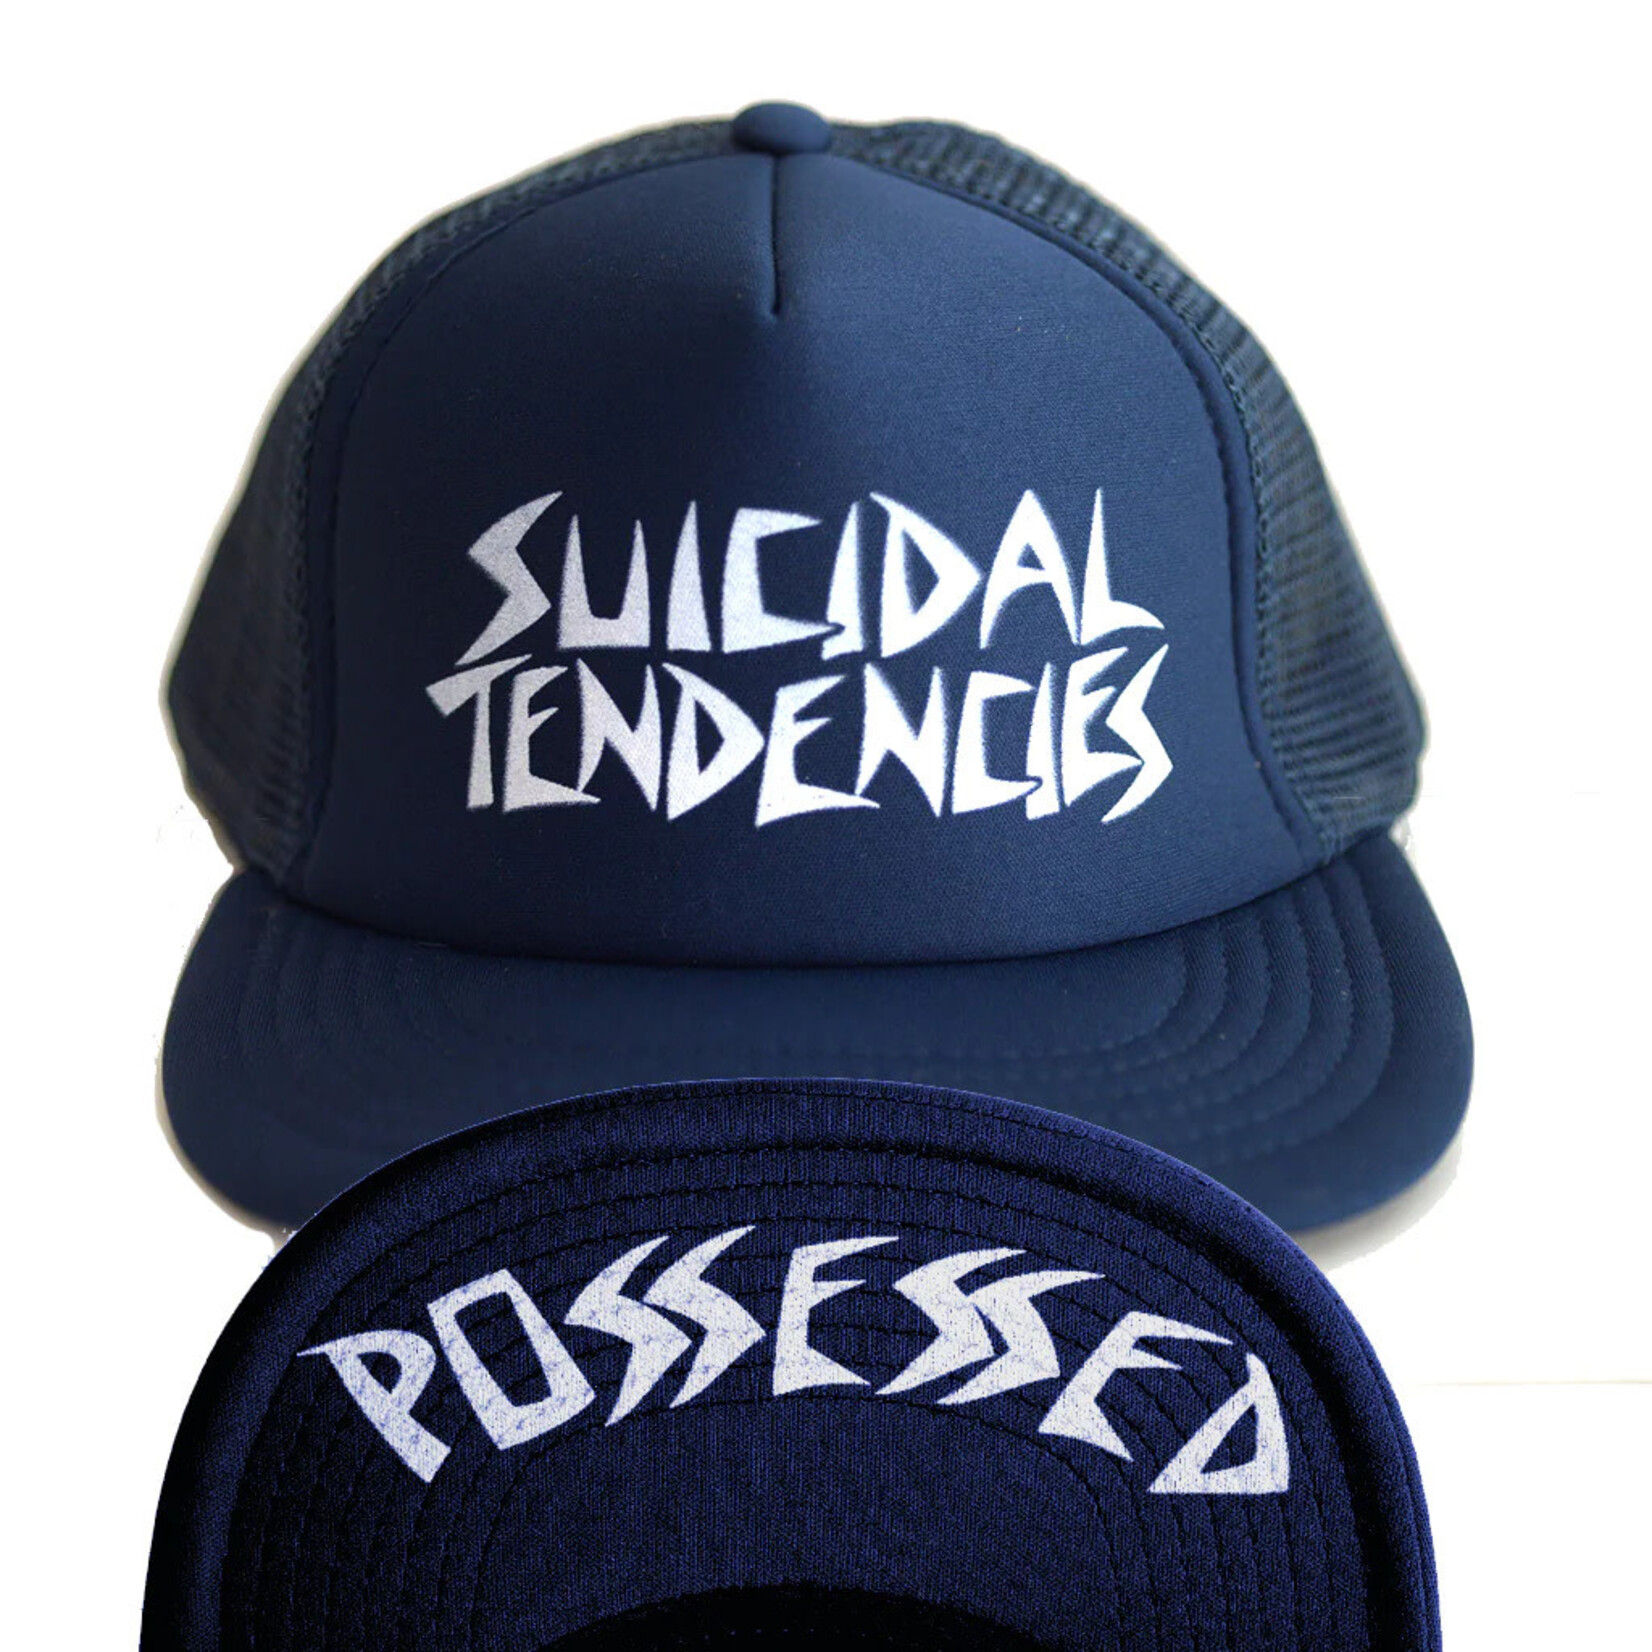 Dogtown Suicidal Tendencies ST OG/Possessed Flip Mesh Hat - Navy